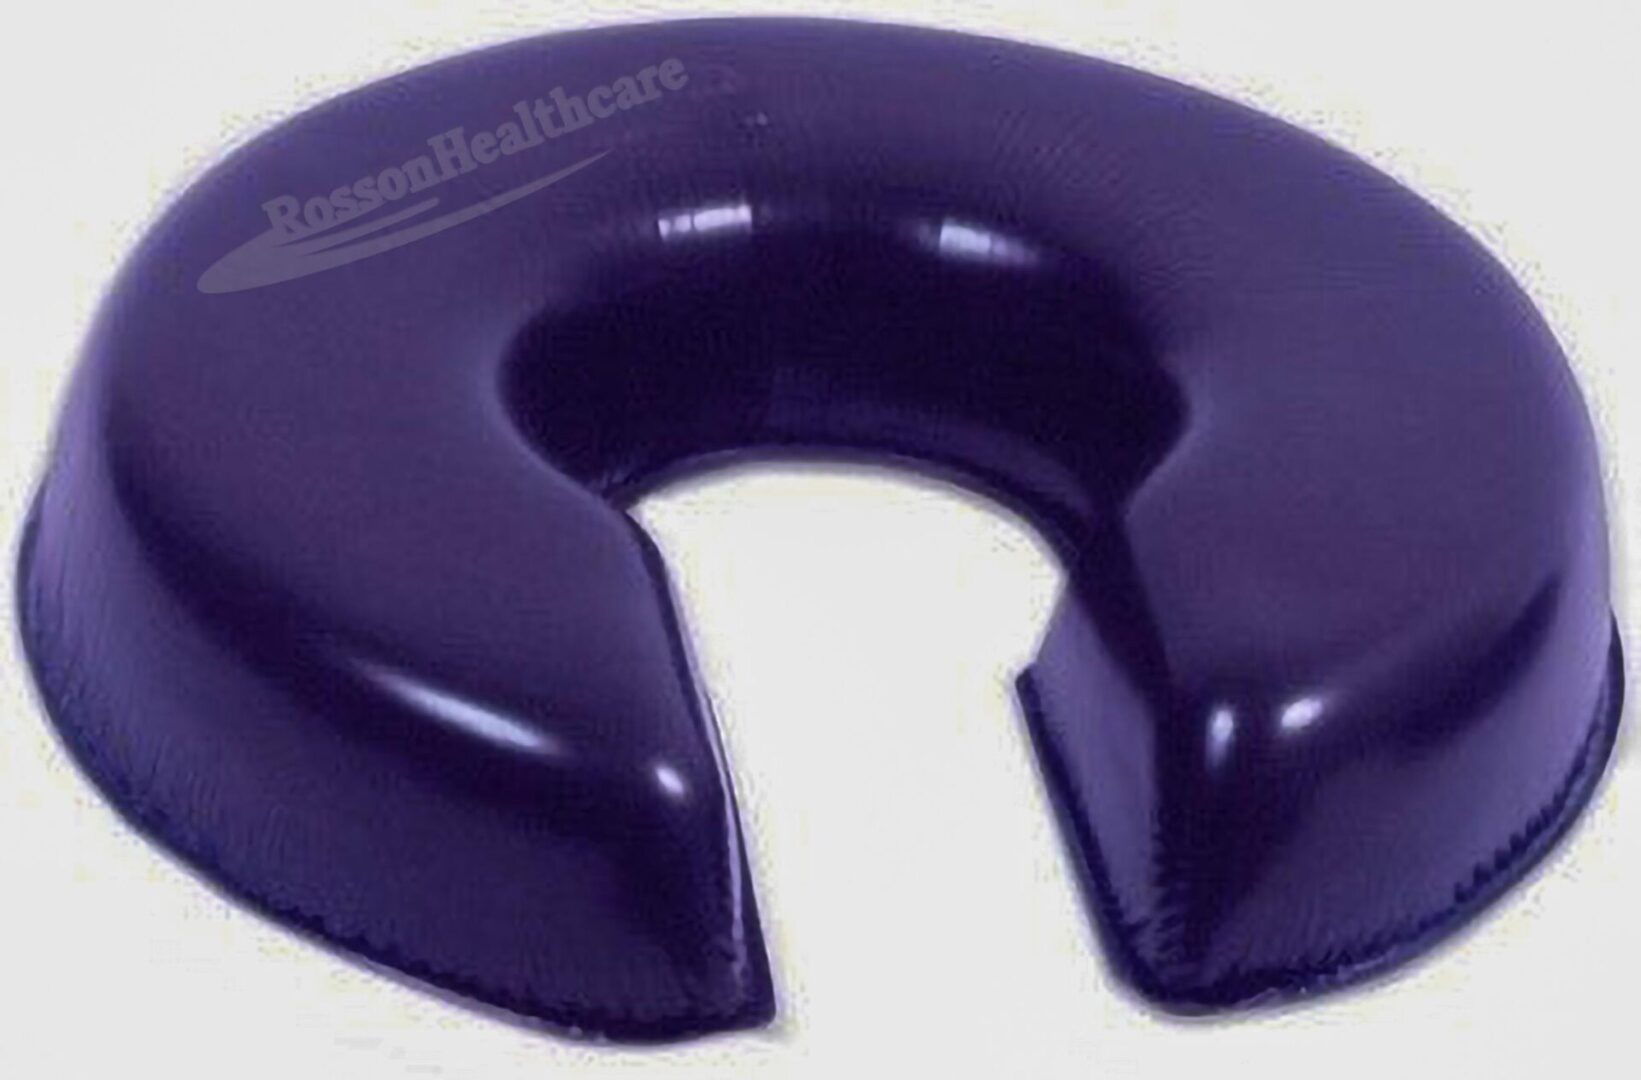 A purple pillow that is shaped like a horseshoe.